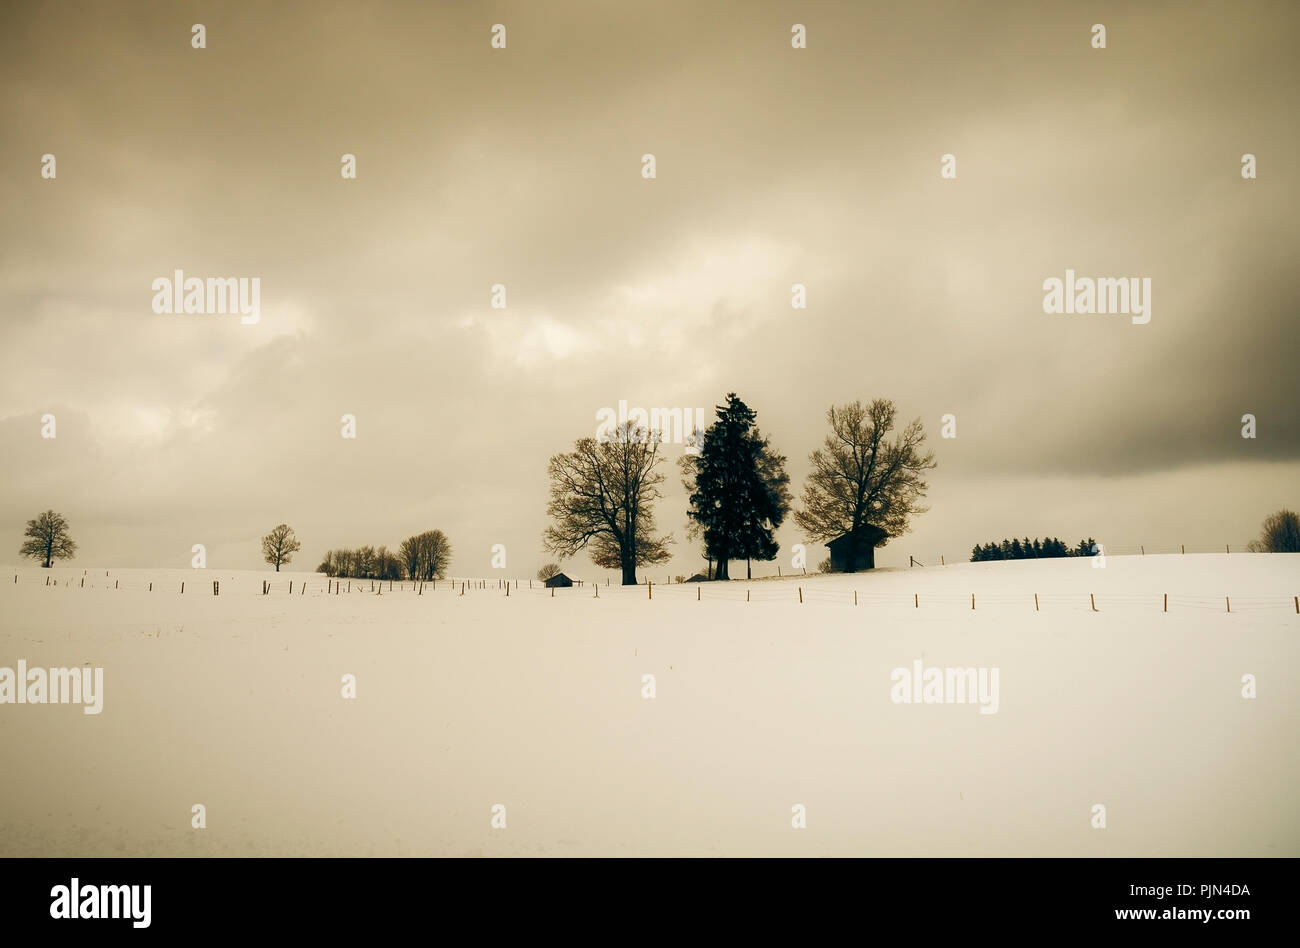 A nice wintry scenery in sepia colours, Eine schoene winterliche Szenerie in Sepia-Farben Stock Photo